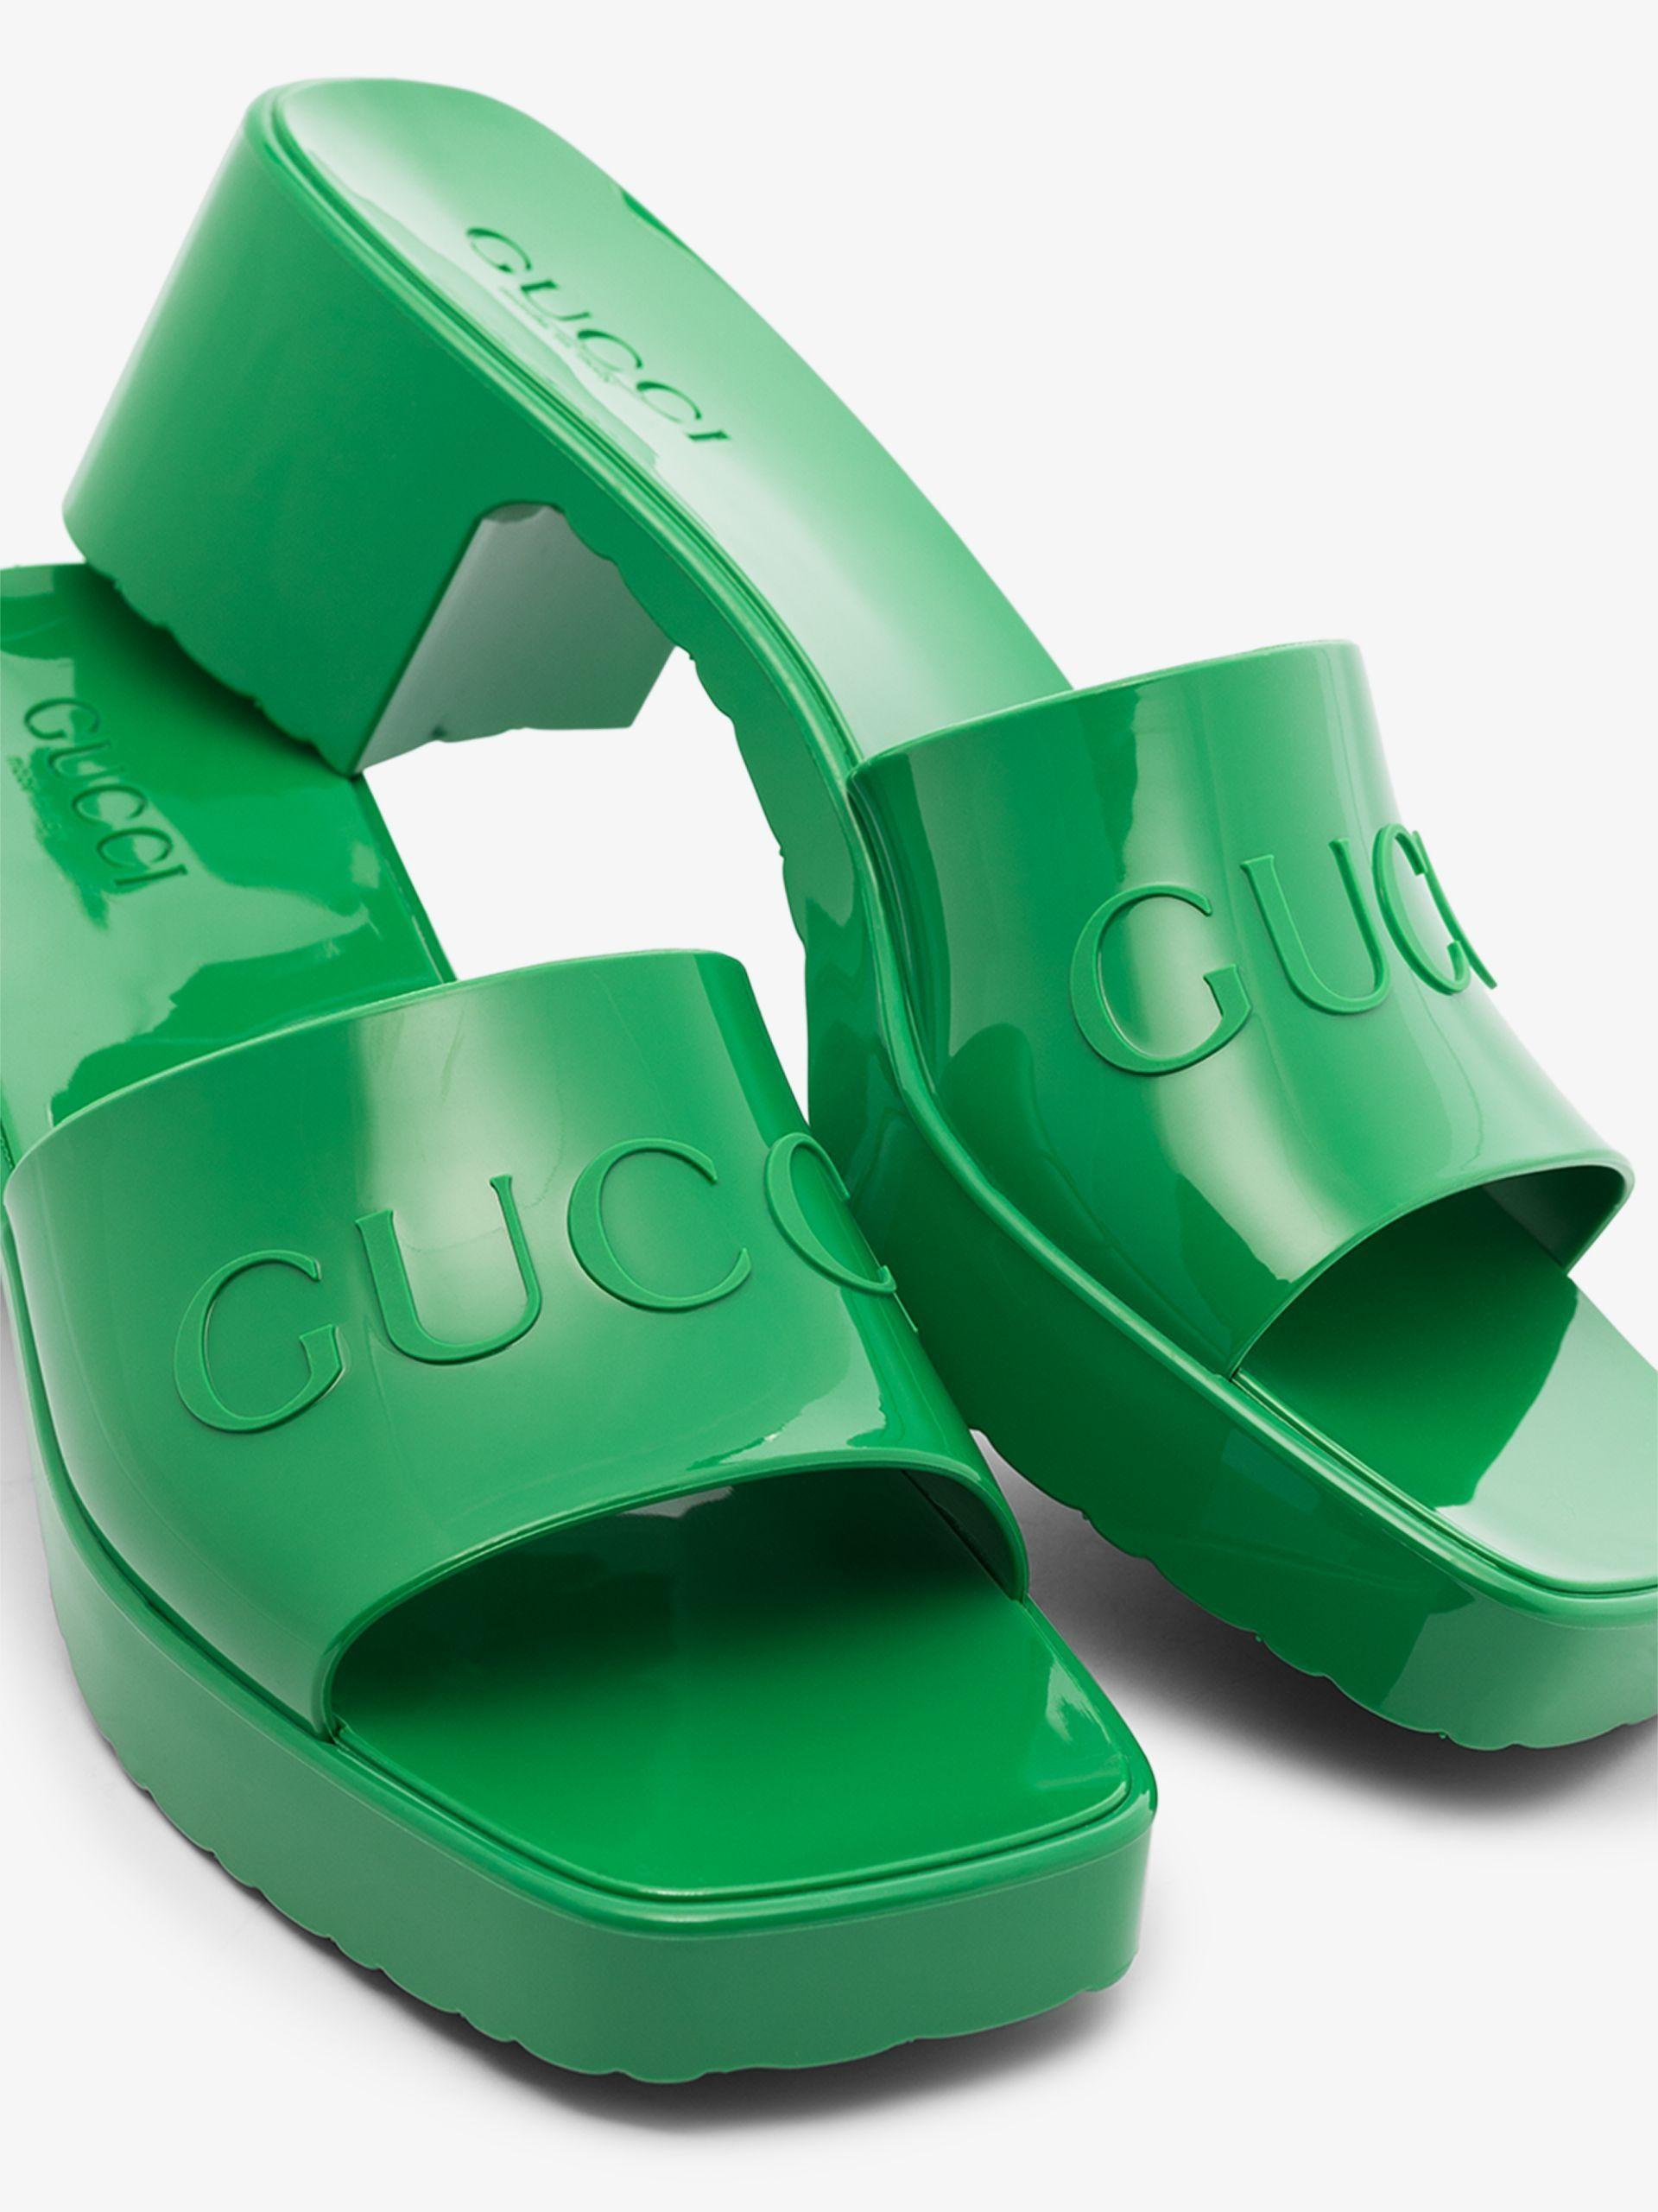 Gucci 60 Block Heel Rubber Sandals in Green | Lyst